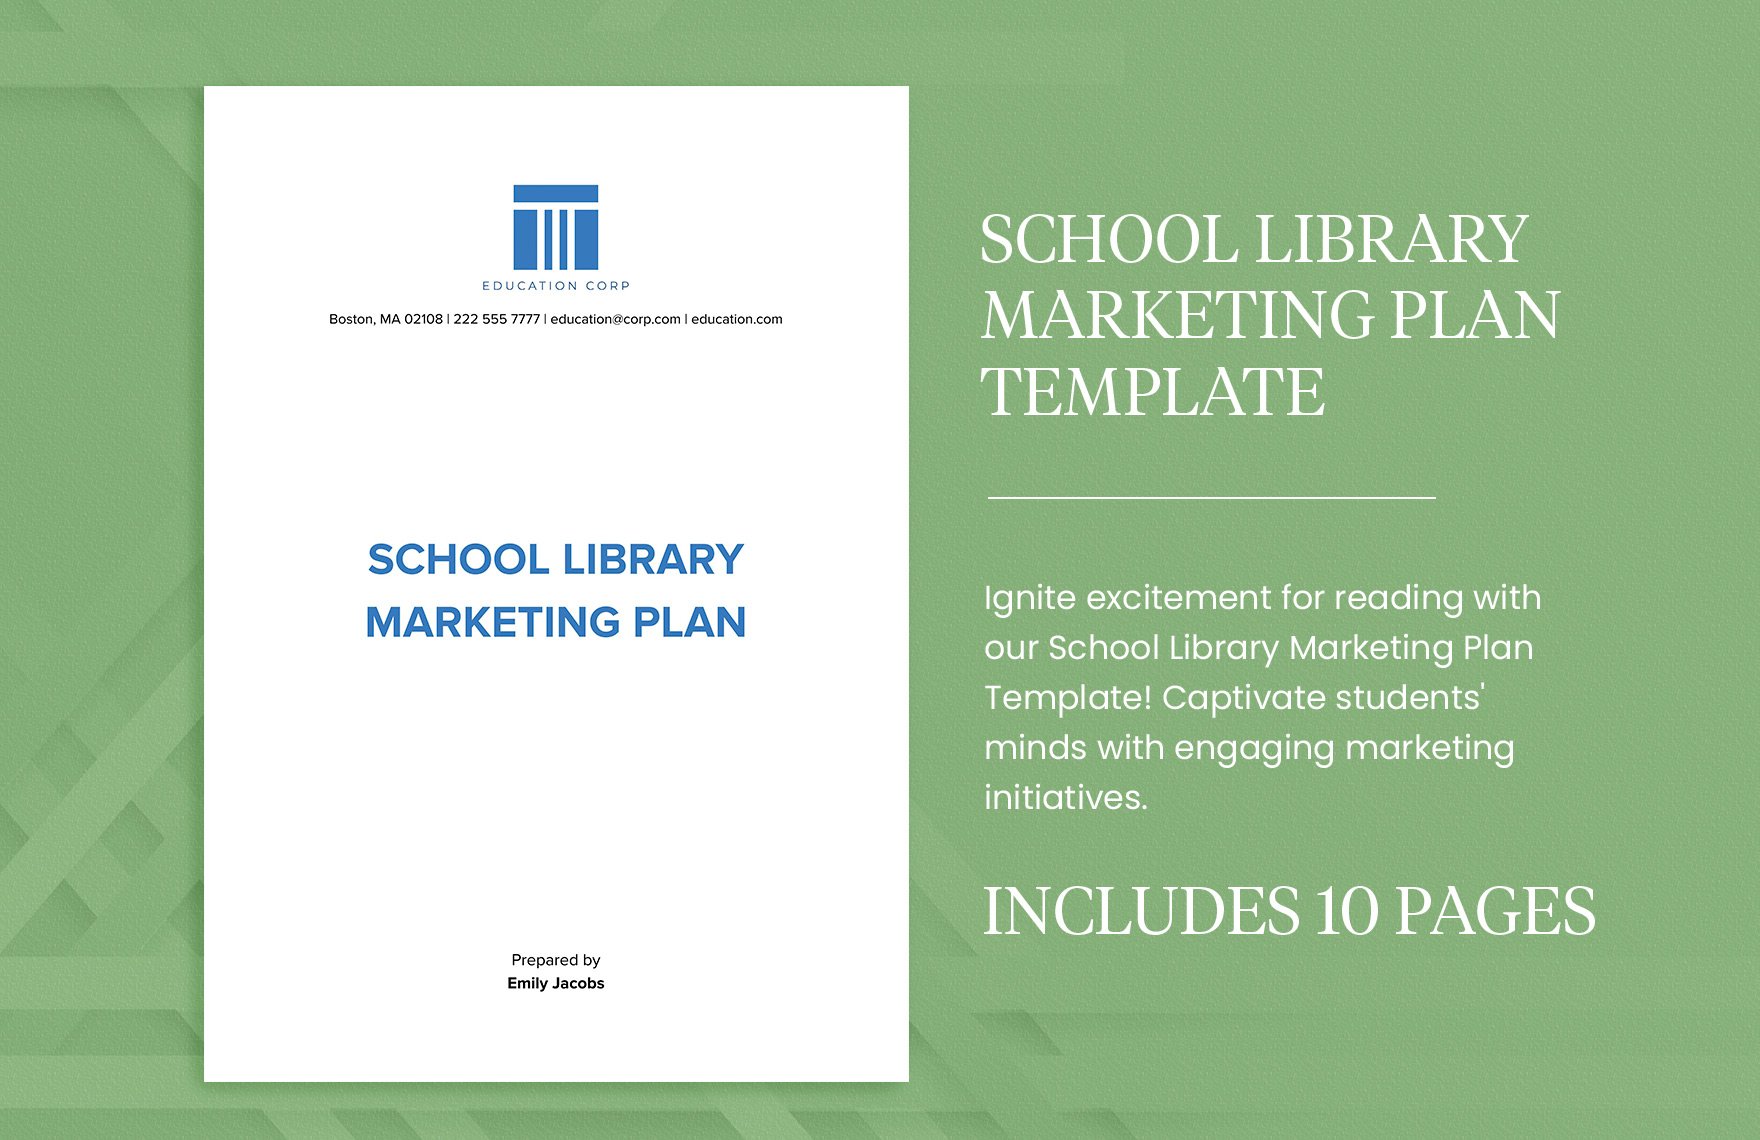 School Library Marketing Plan Template